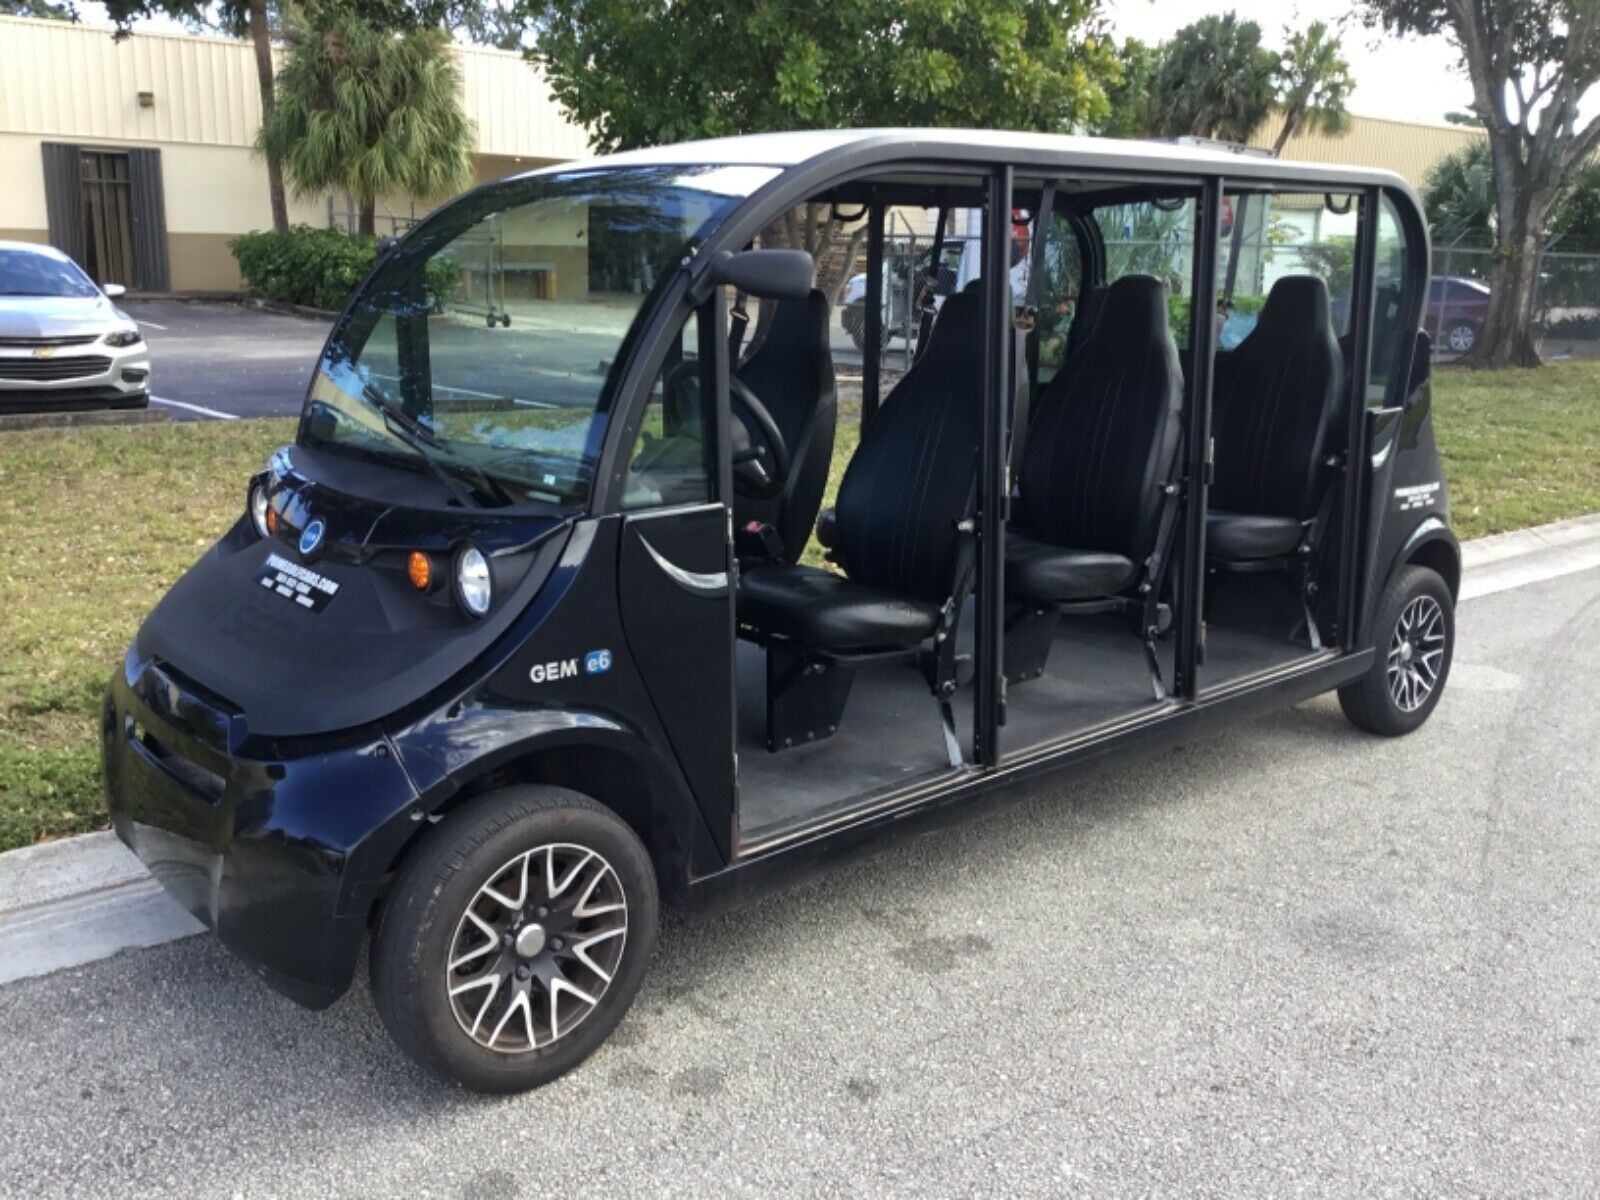 2016 polaris gem e6 utility 6 passenger golf cart extended limousine